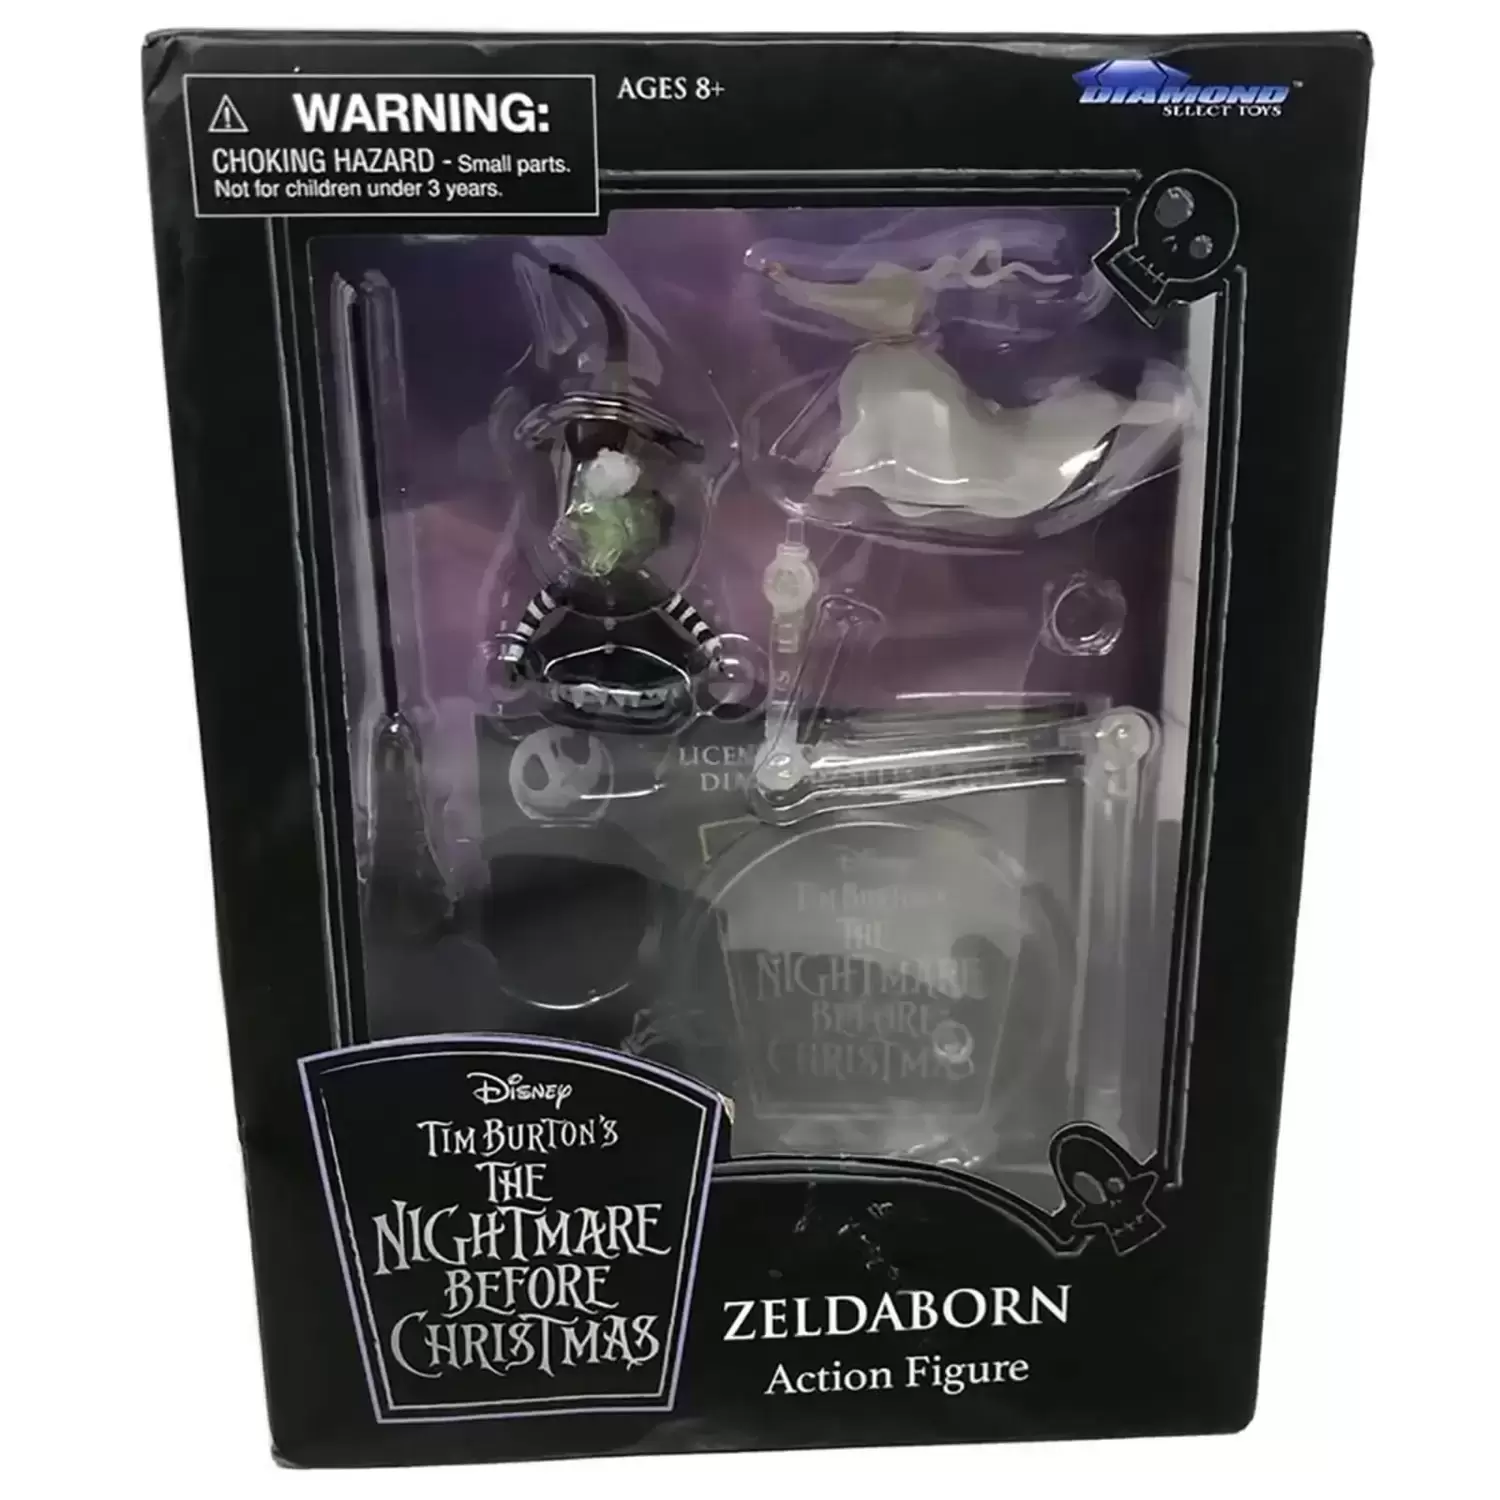 The Nightmare Before Christmas - Diamond Select - Zeldaborn